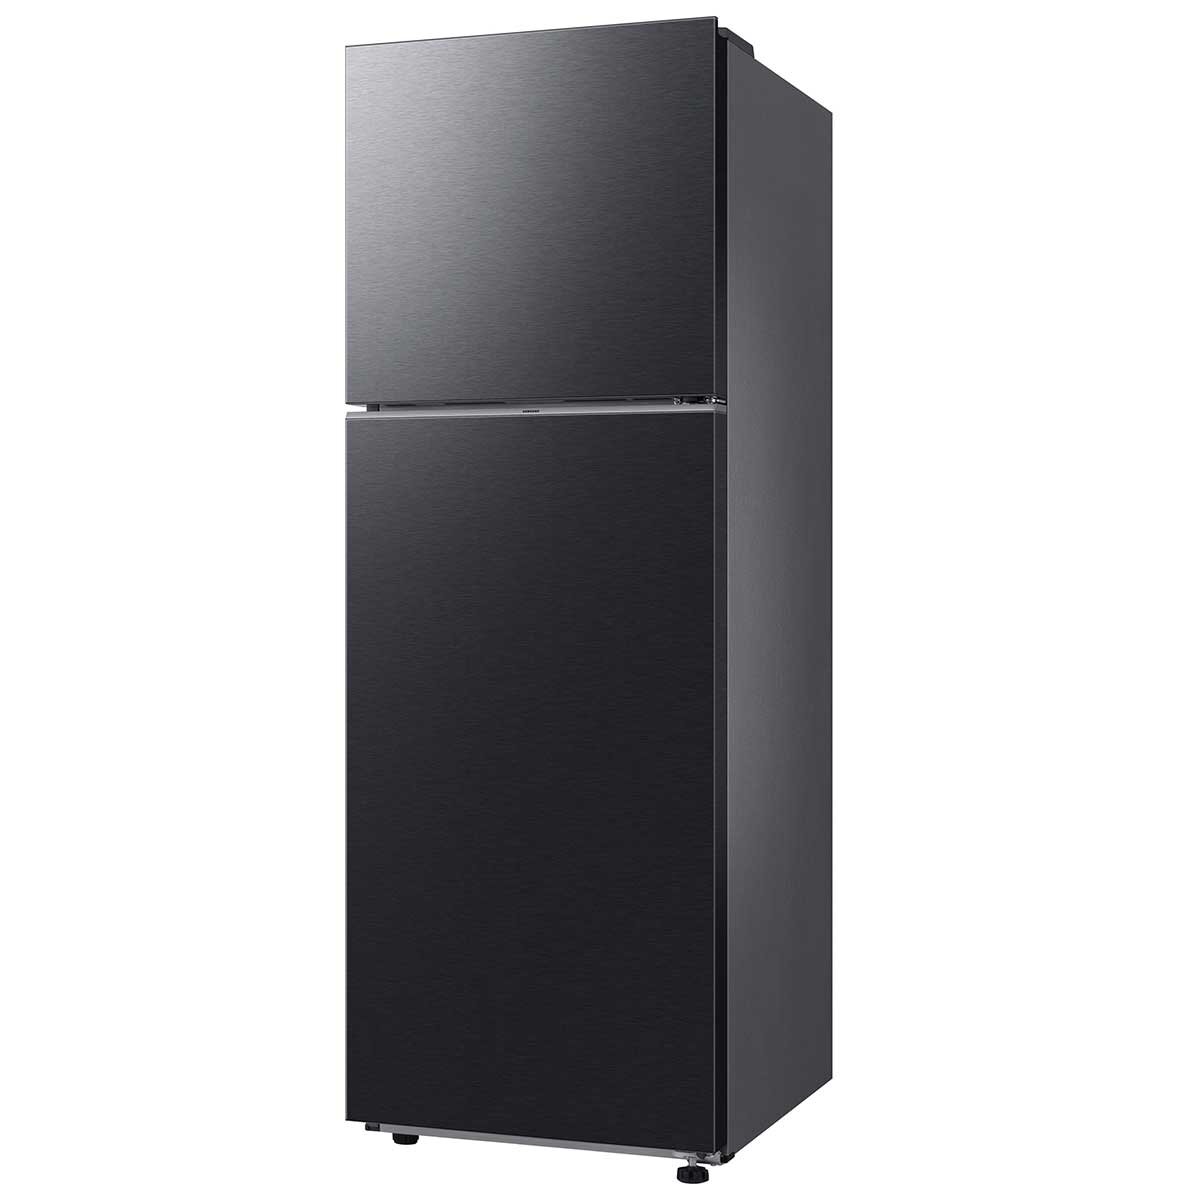 Samsung 348L Top Mount Refrigerator Black SRT3700B